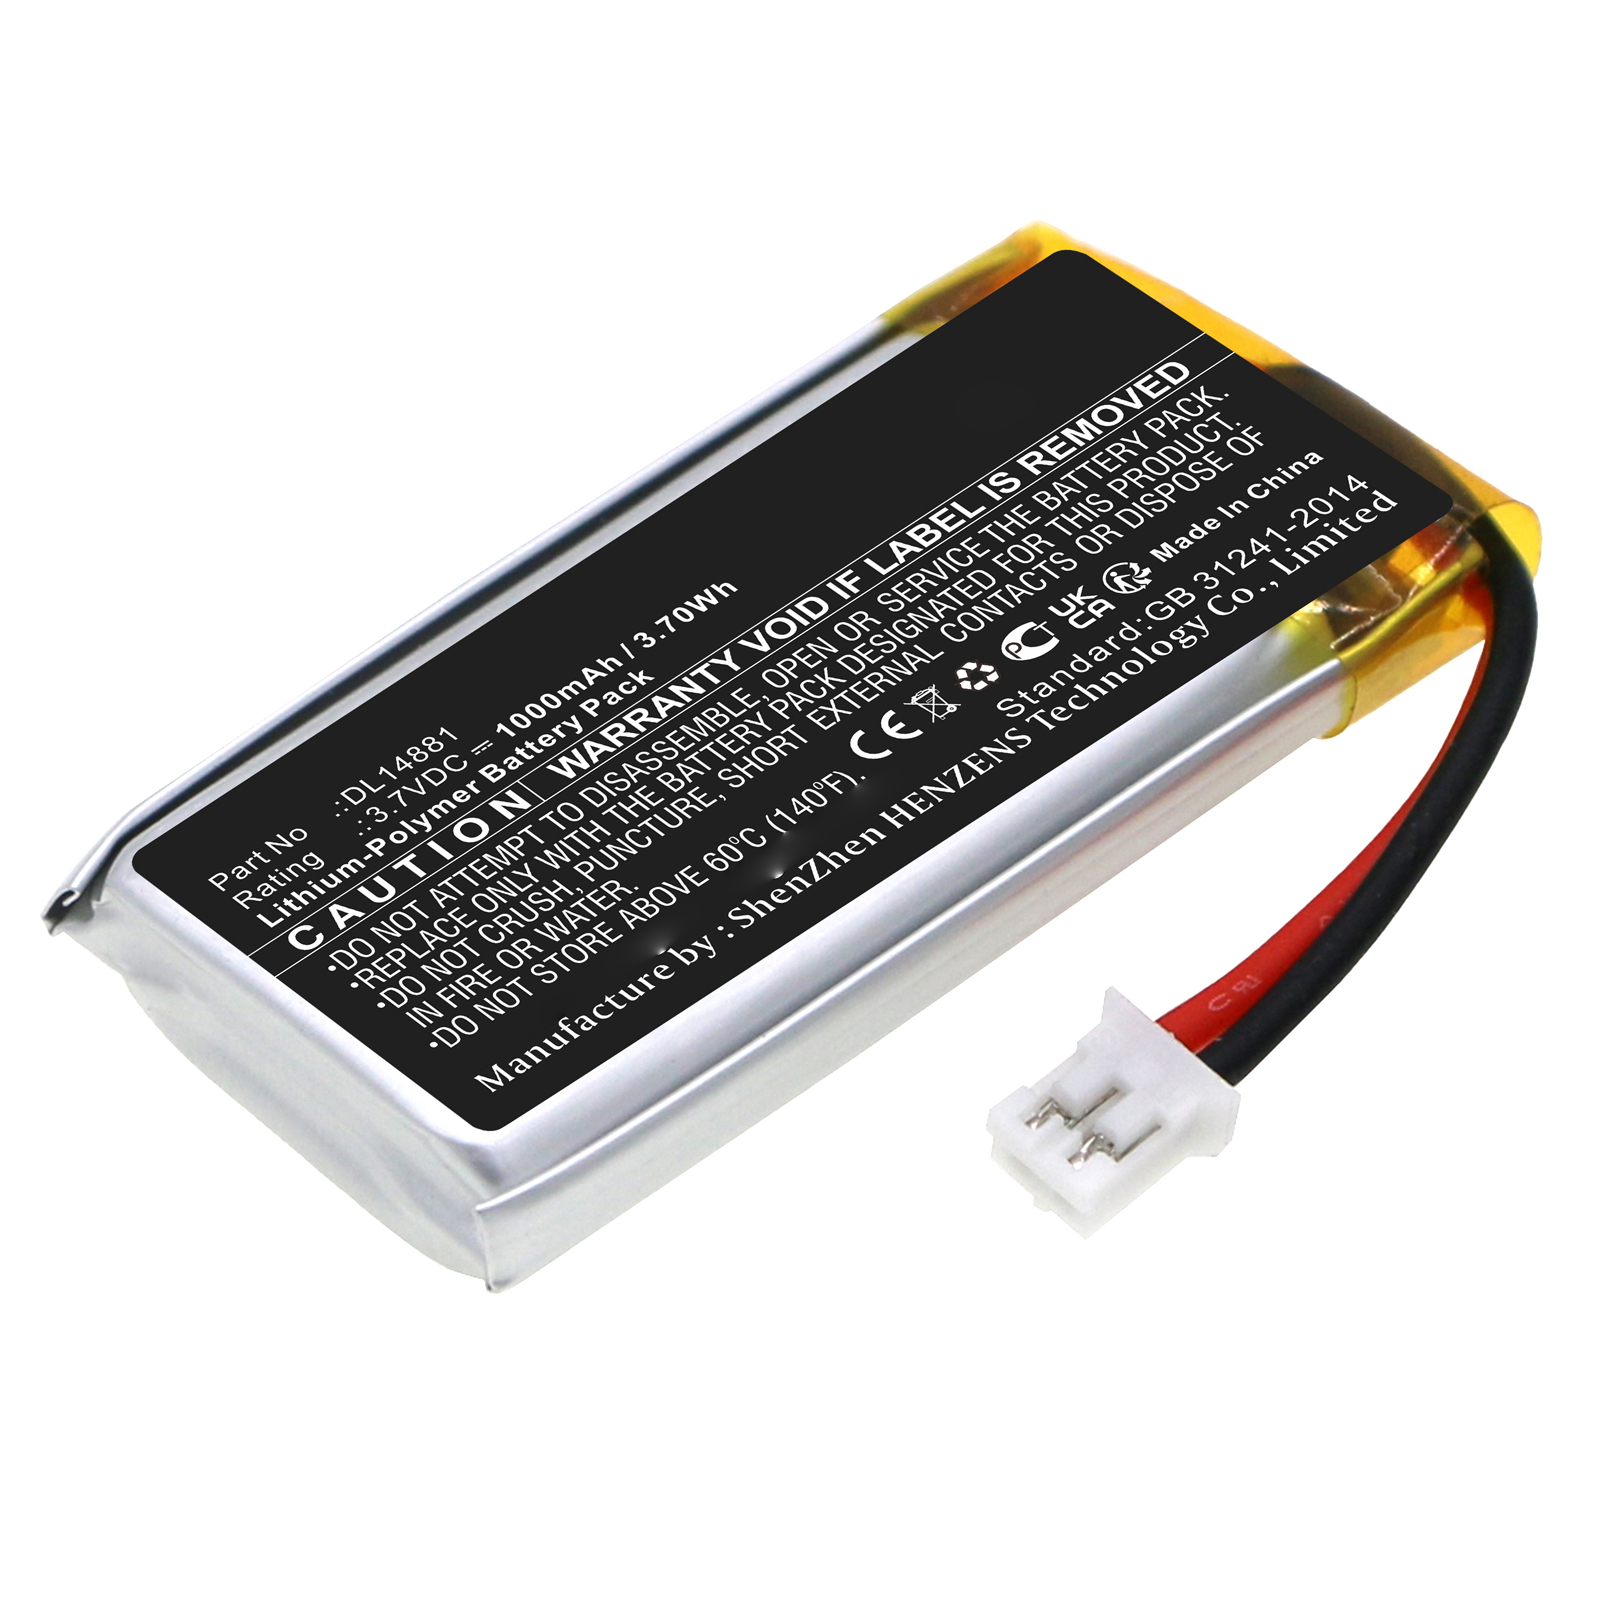 Batteries for DELIBarcode Scanner